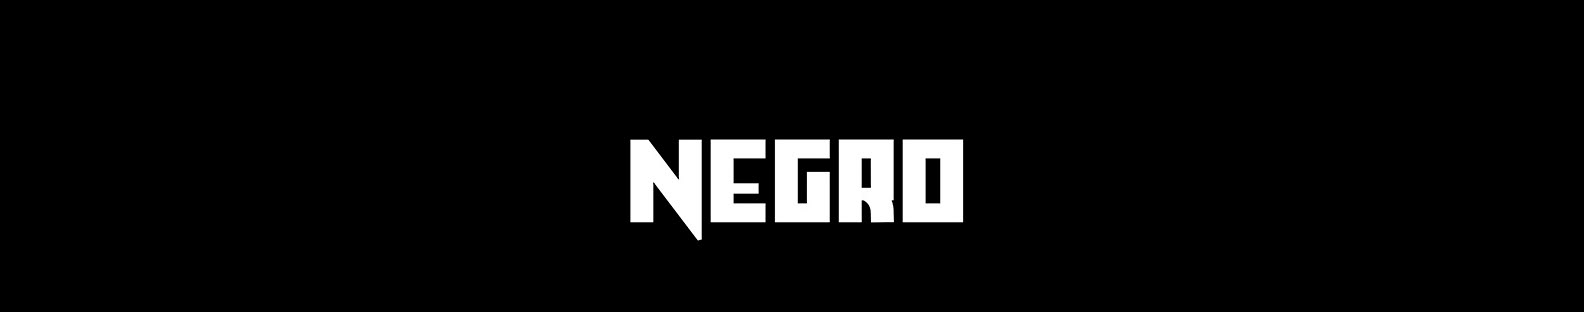 Negro Sousa's profile banner